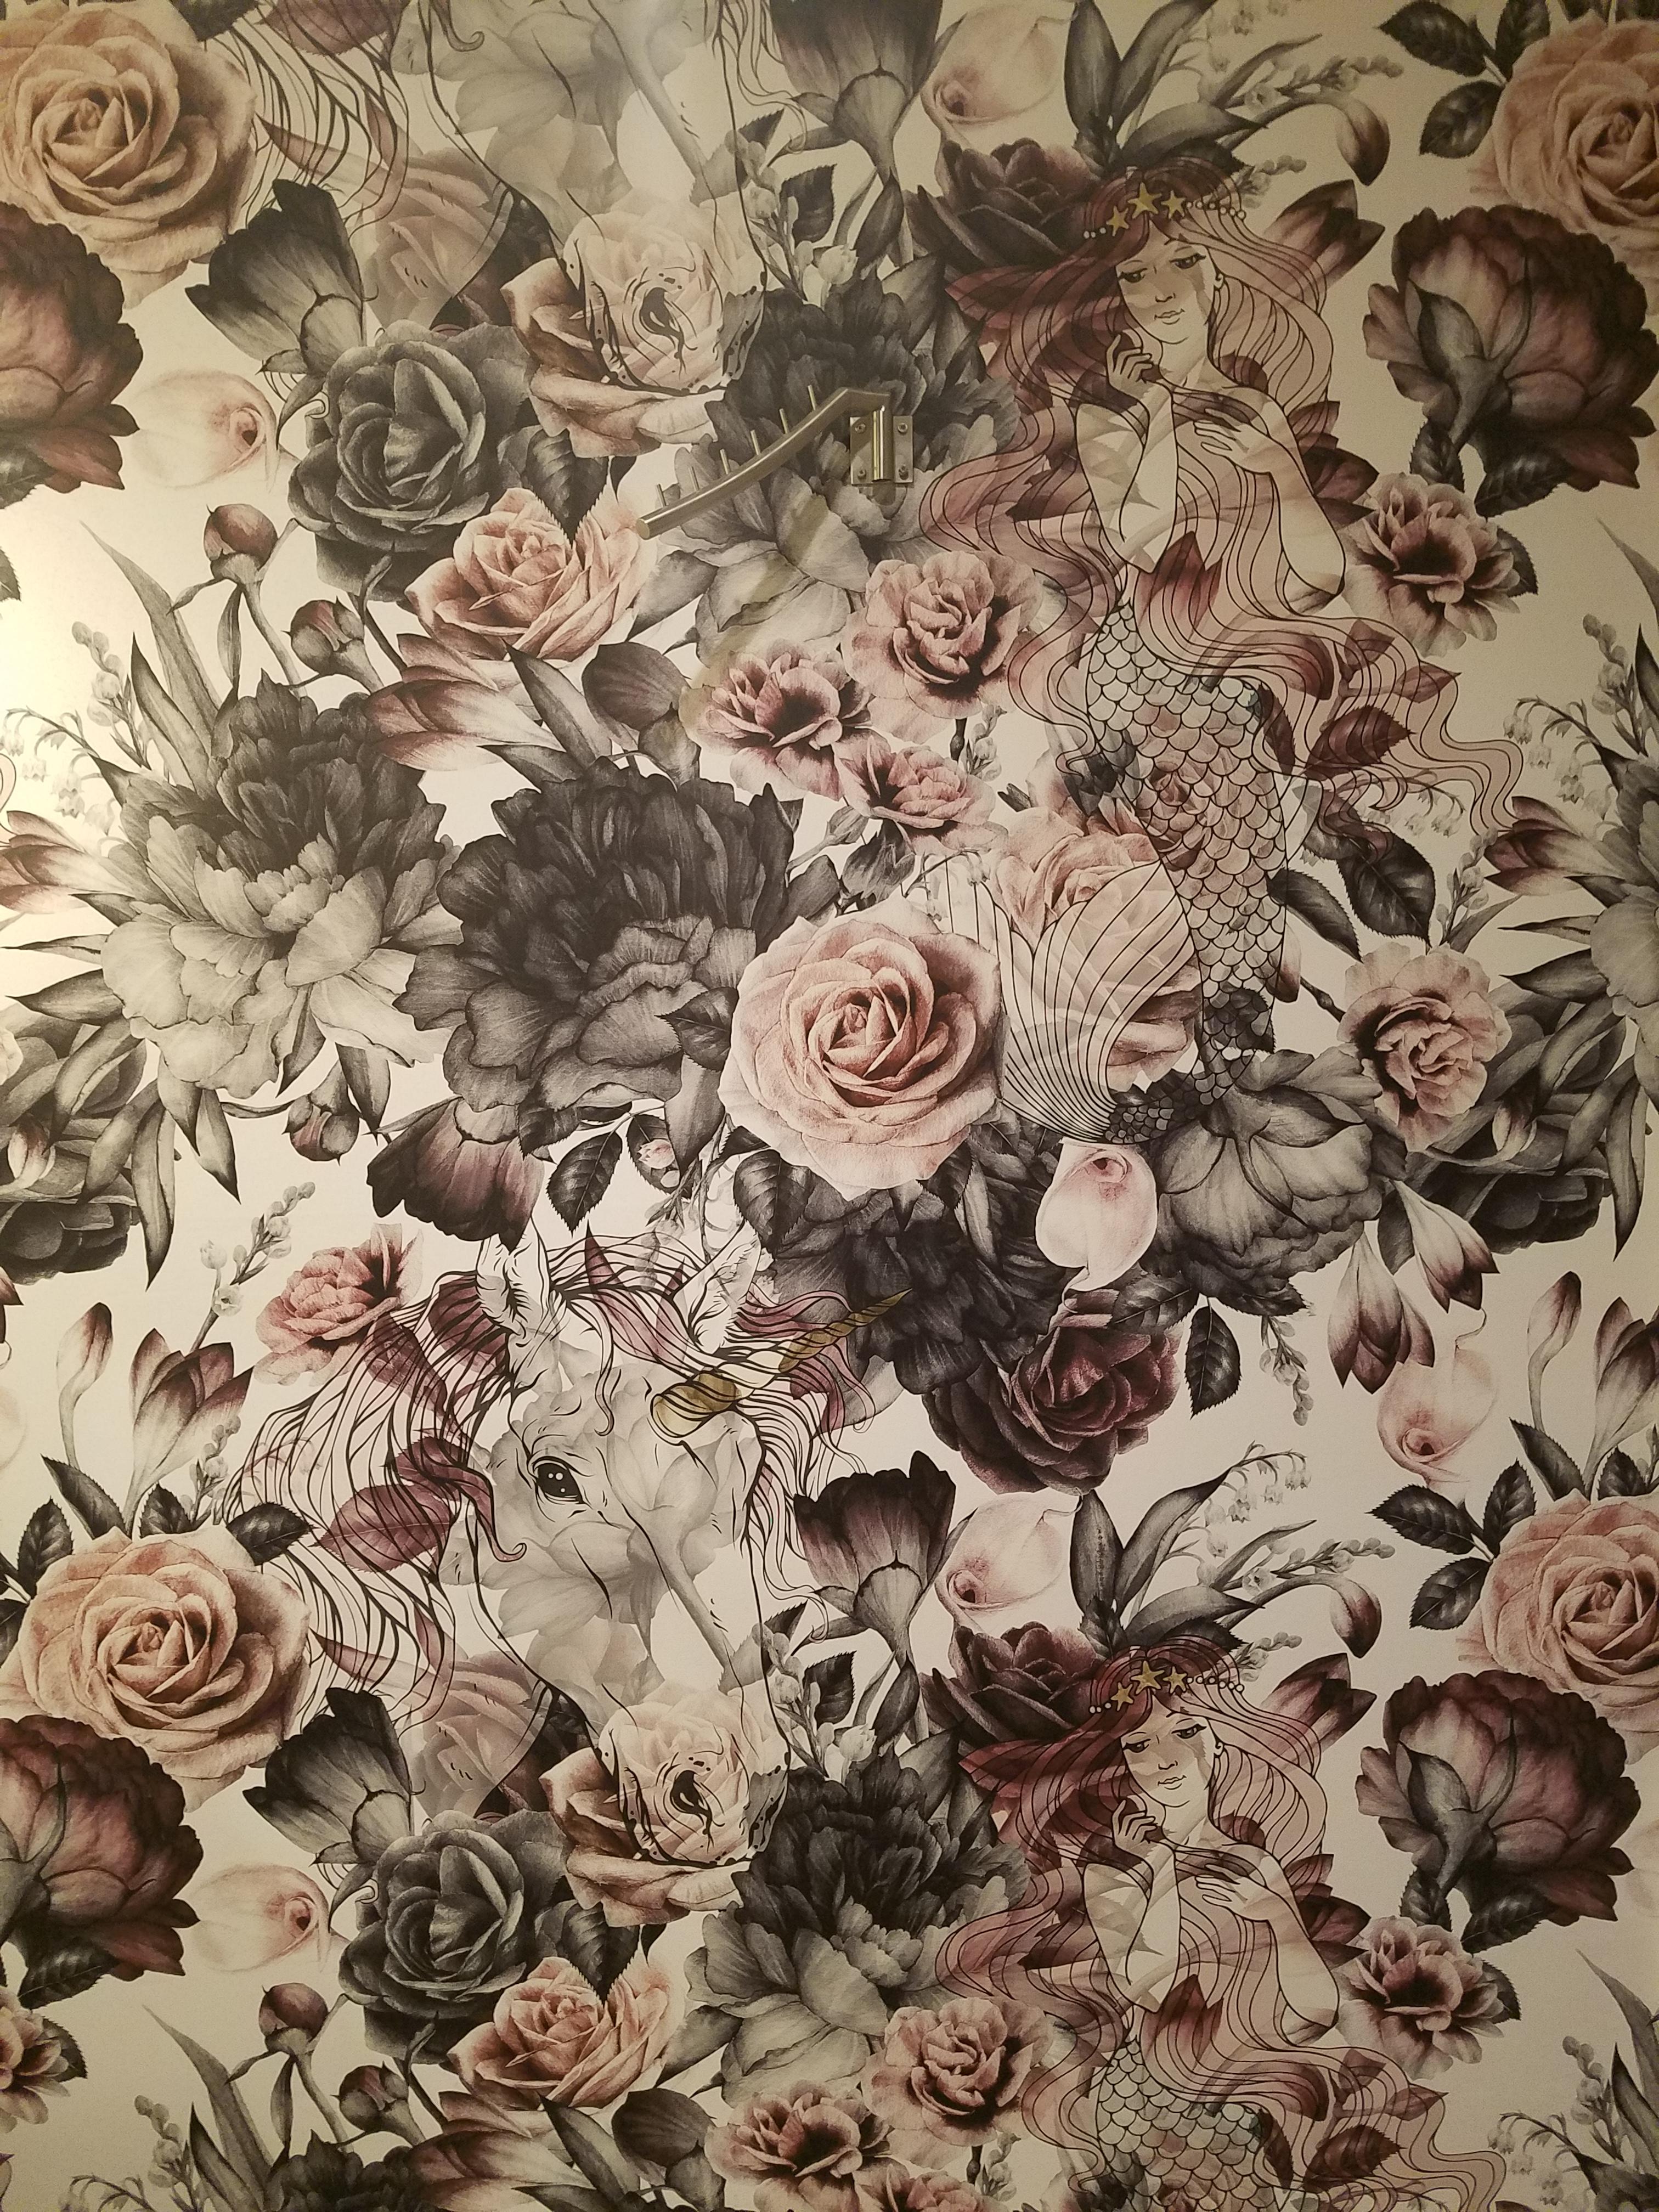 mermaid wallpaper,pattern,floral design,textile,rose,brown